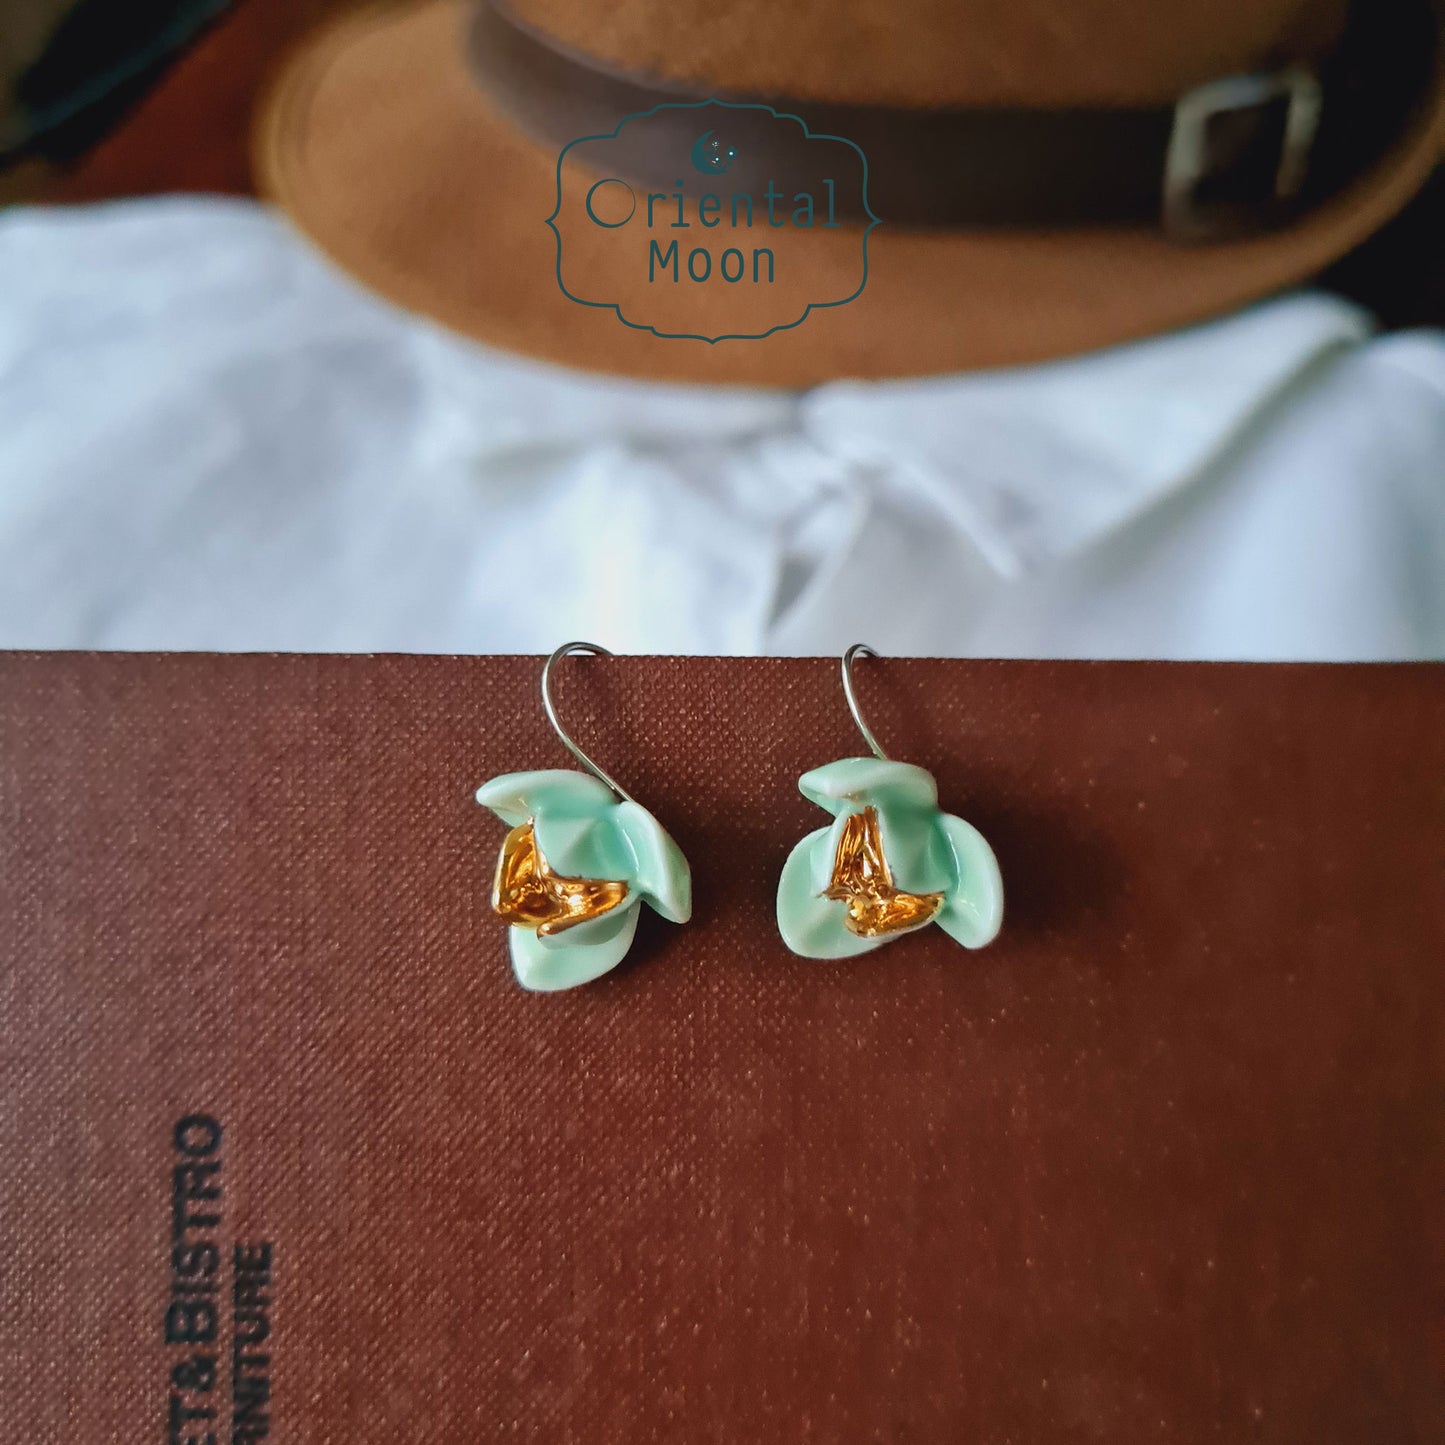 Dok Lam Duan earrings with 925 sterling silver hook